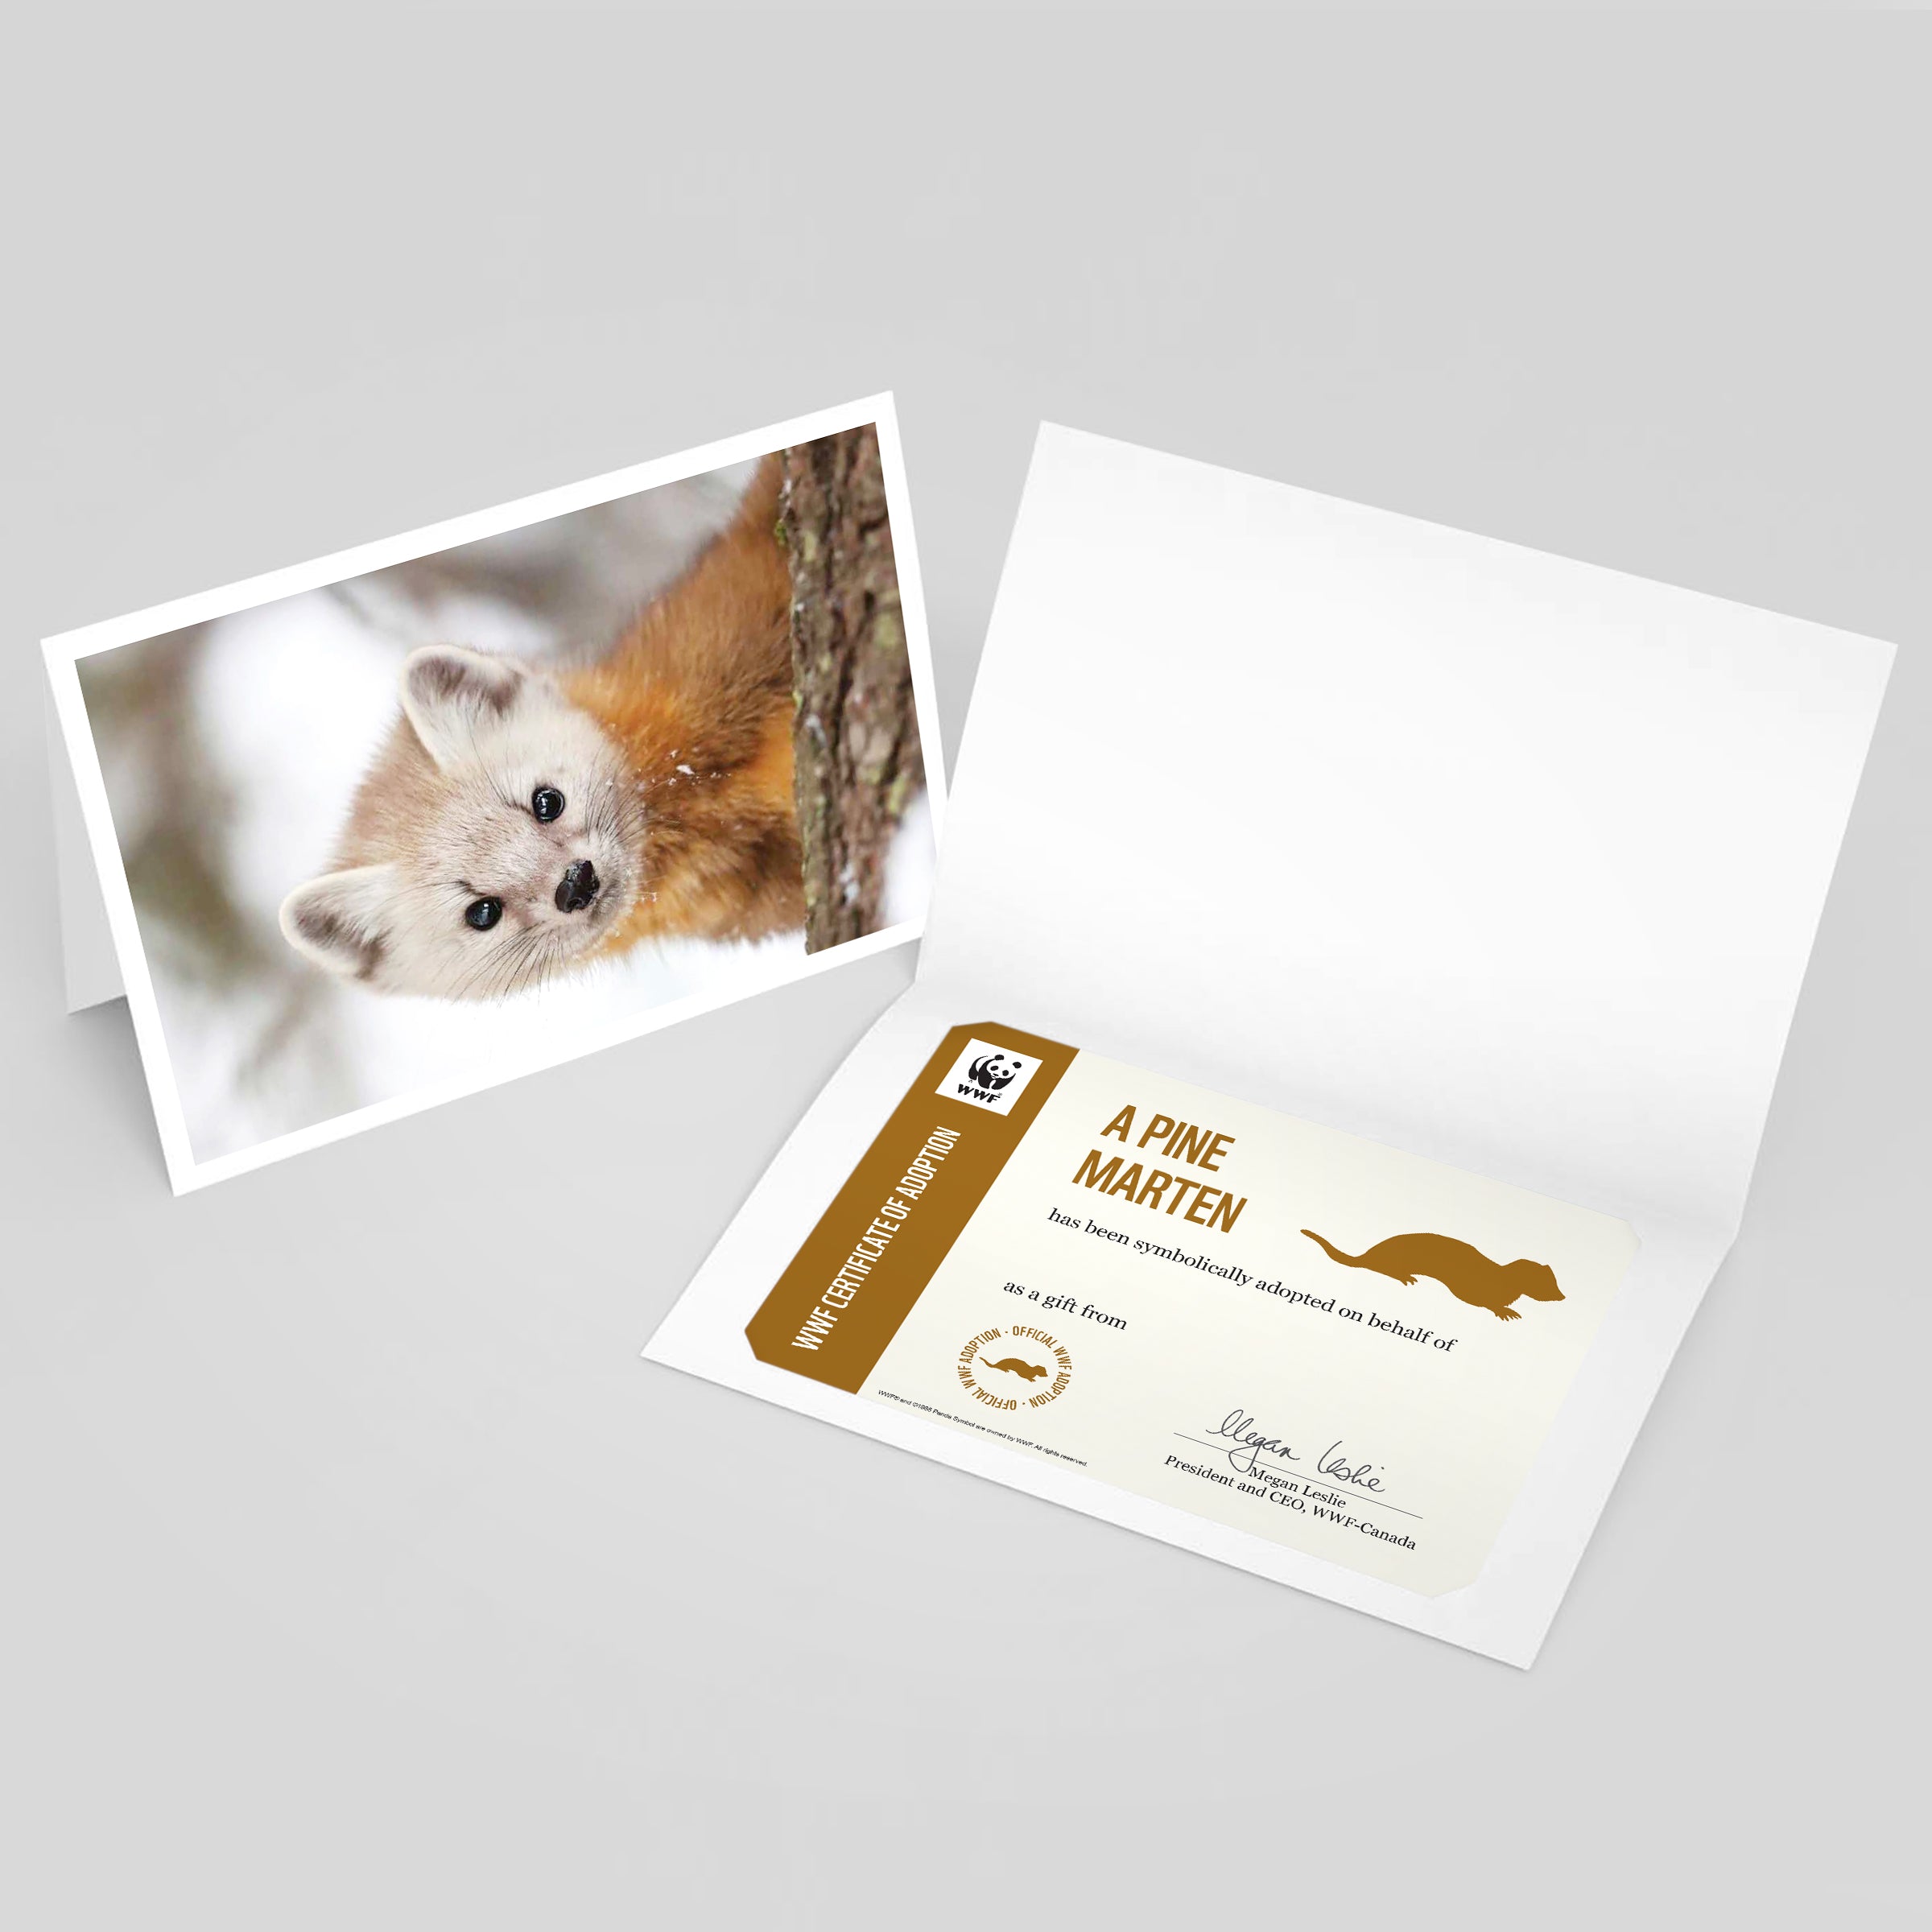 Pine marten adoption card - WWF-Canada